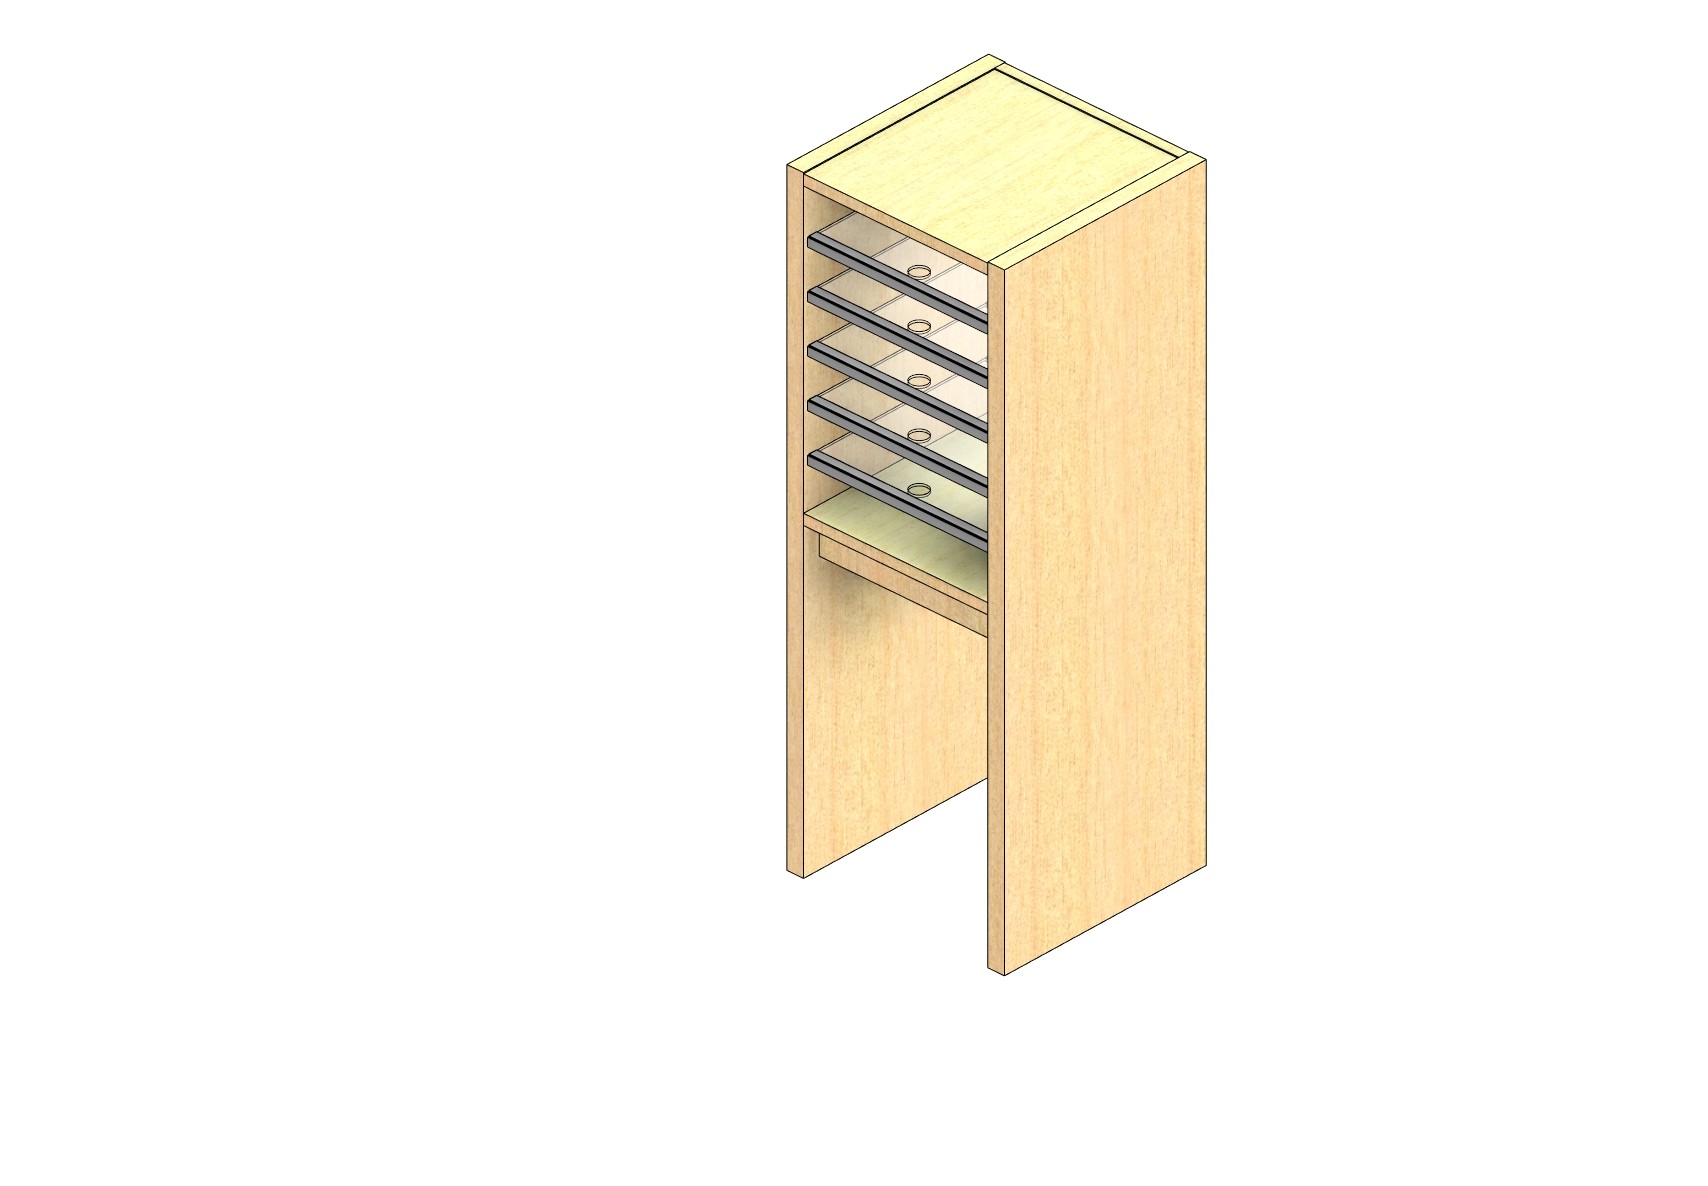 Standard Sized Plexi Back Sort Module - 1 Column - 18" Sorting Height w/ 18" Riser